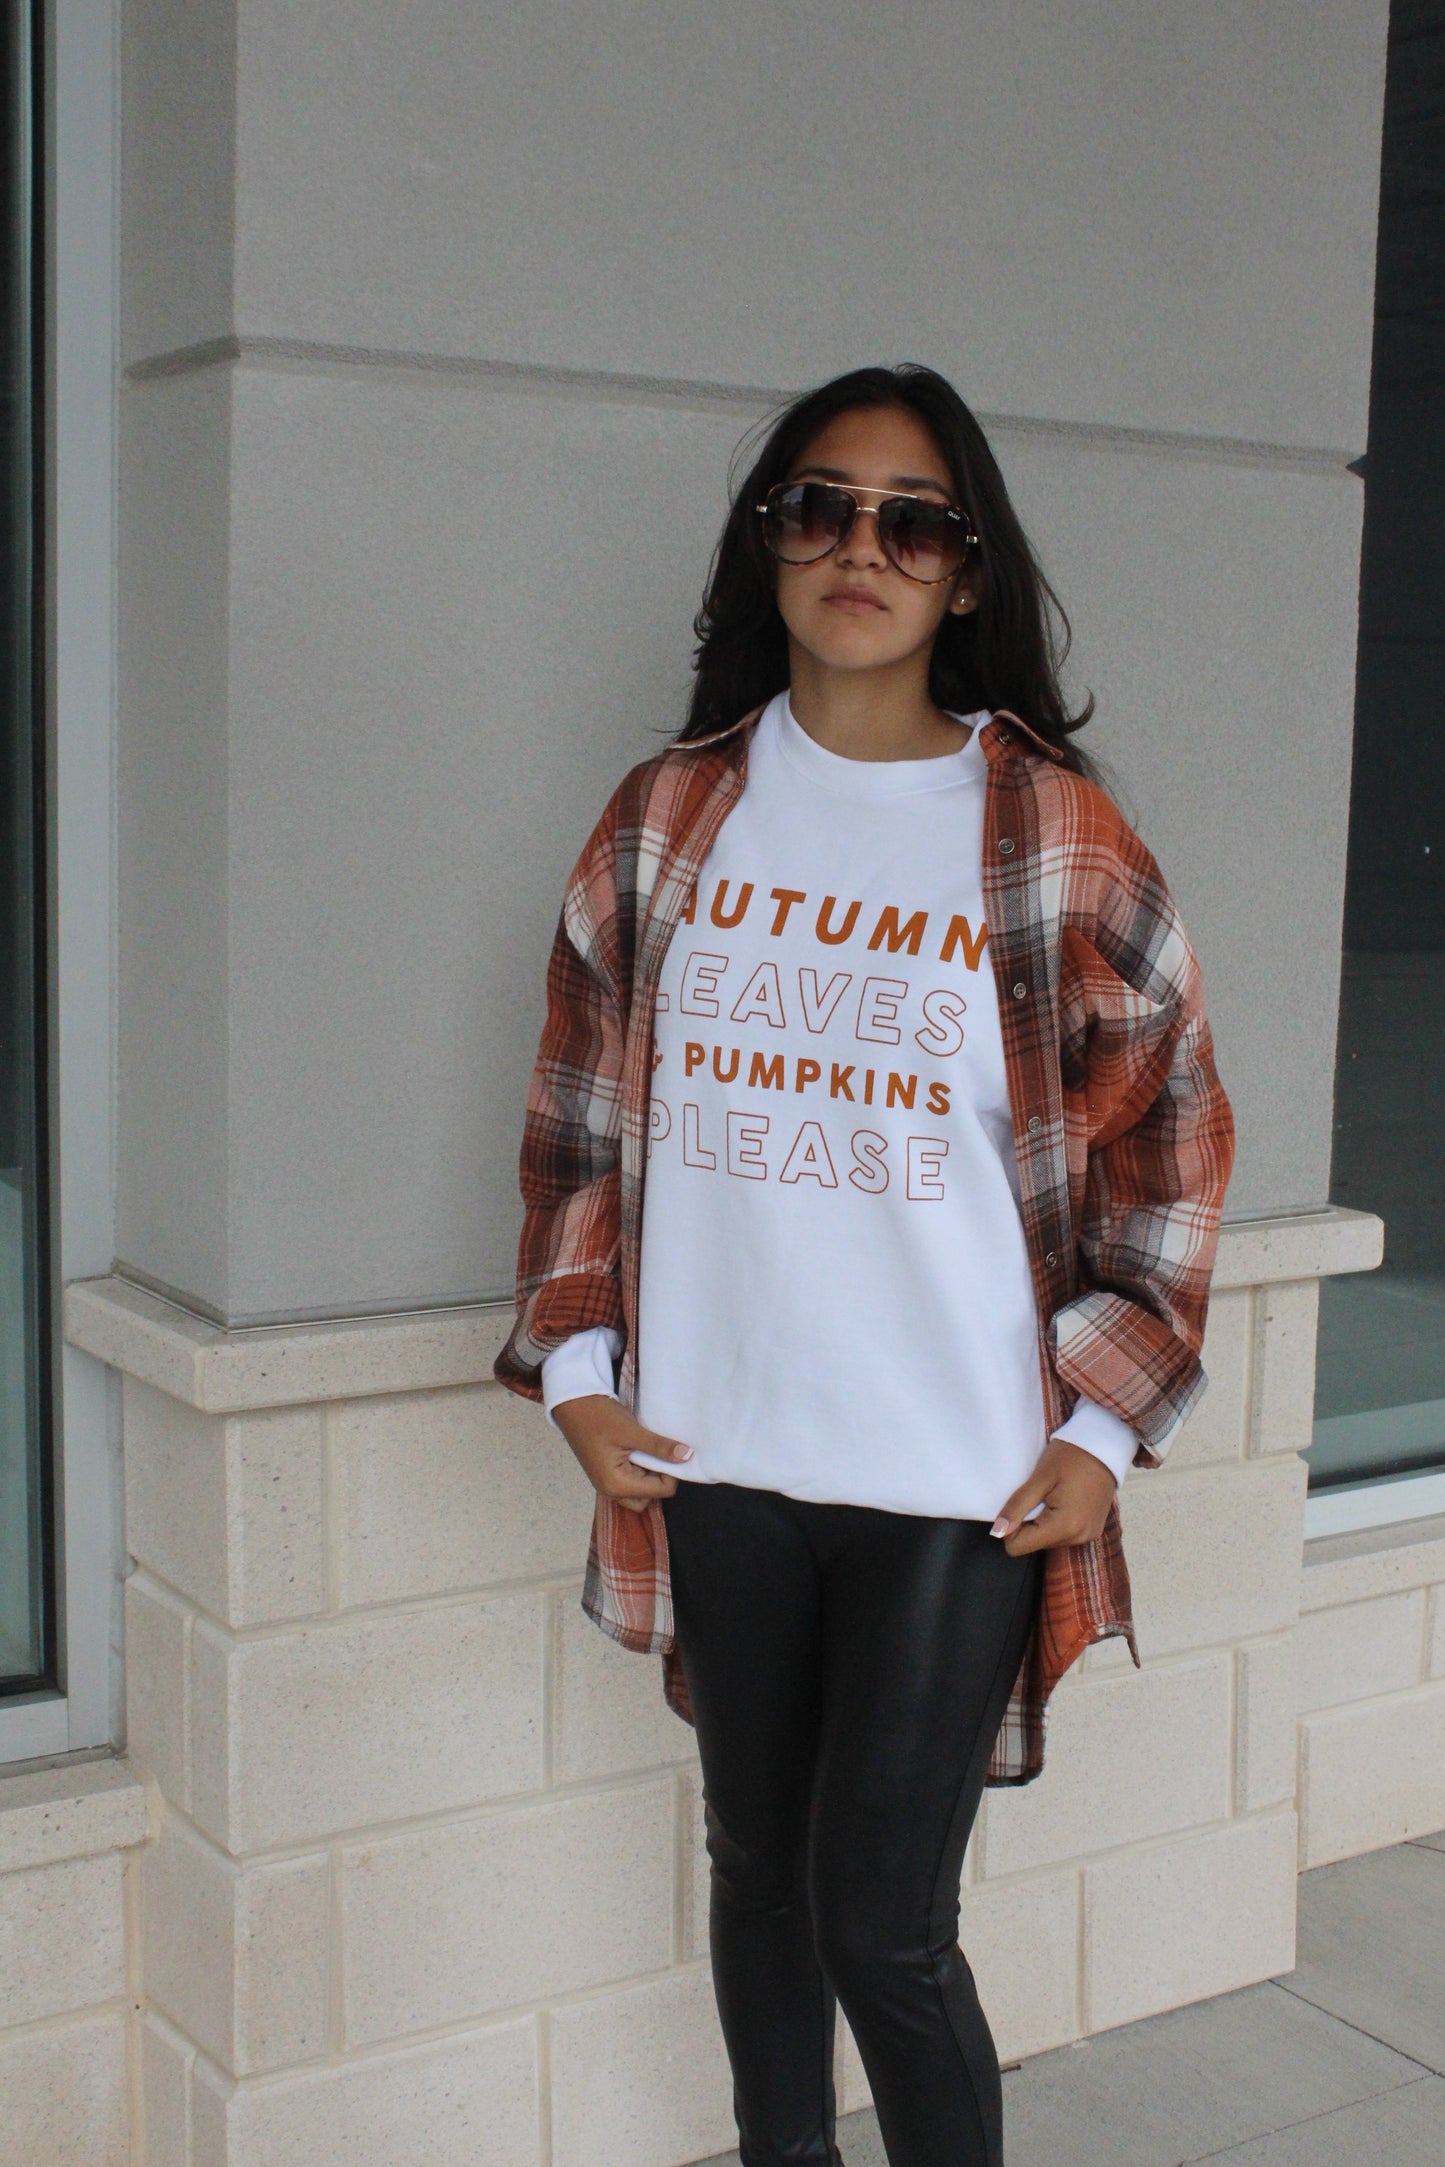 Autumn Leaves and Pumpkins Graphic Sweatshirt